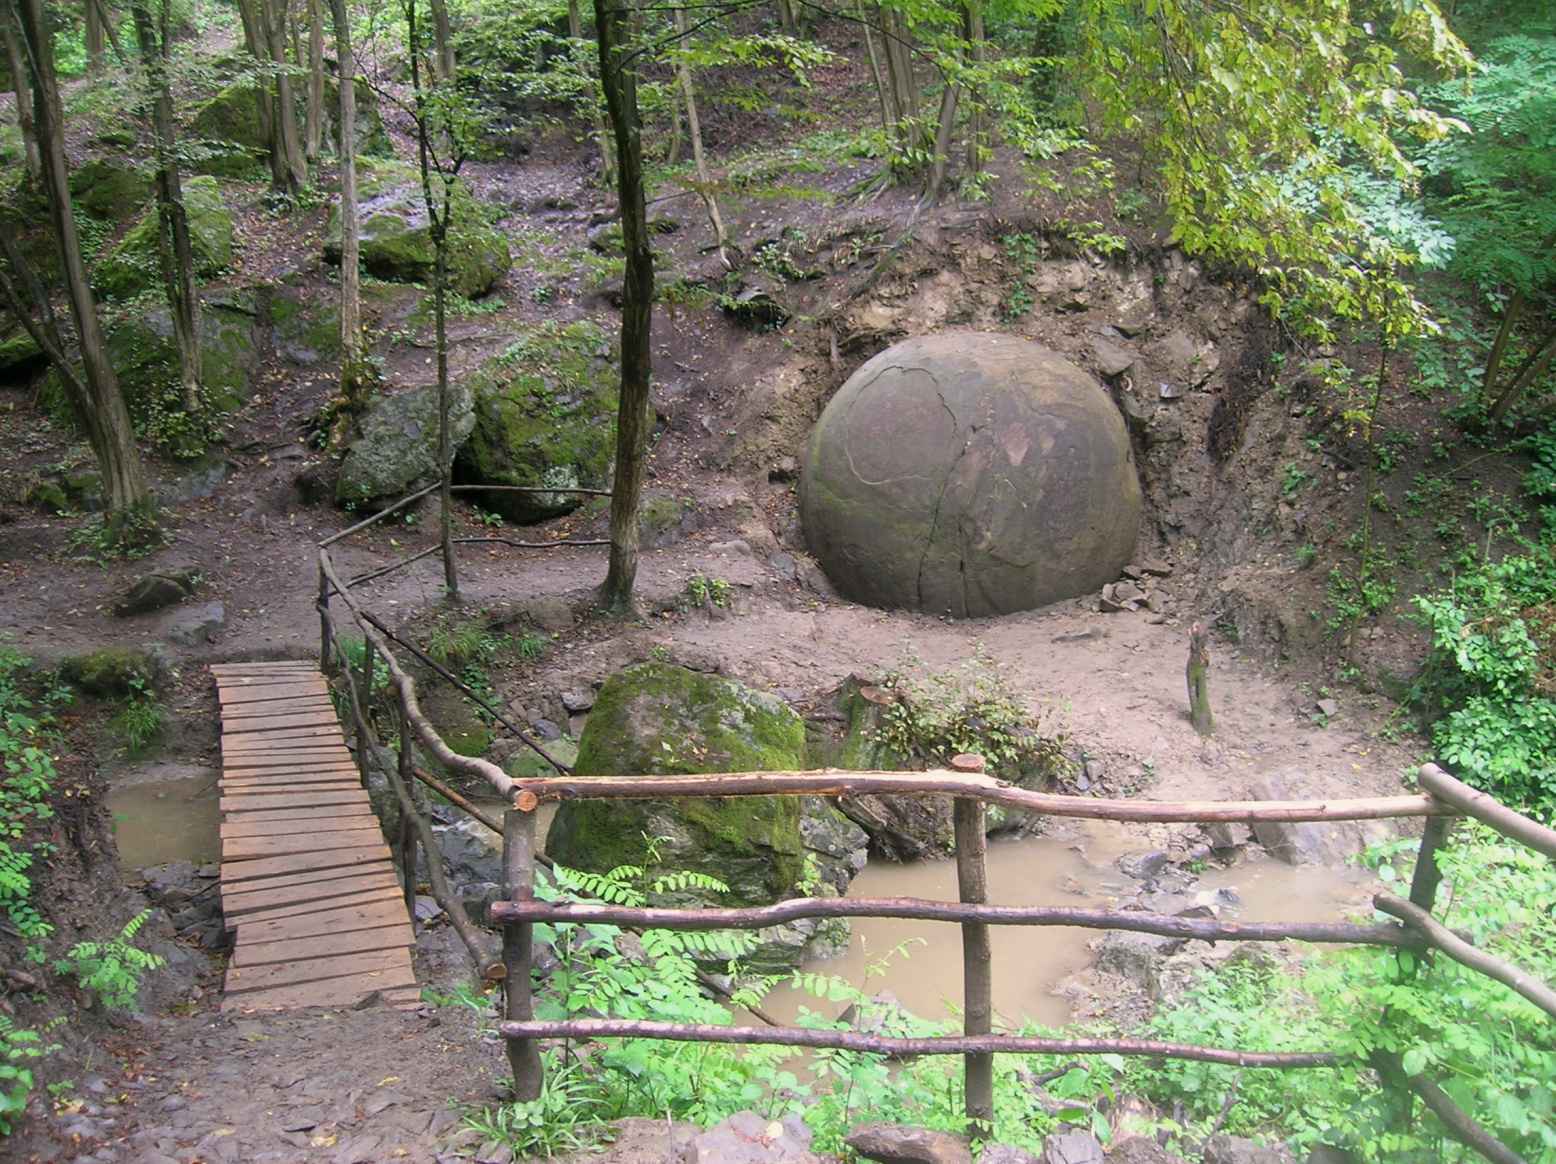 Strange Stone sphere, Vosoko Region, Bosnia